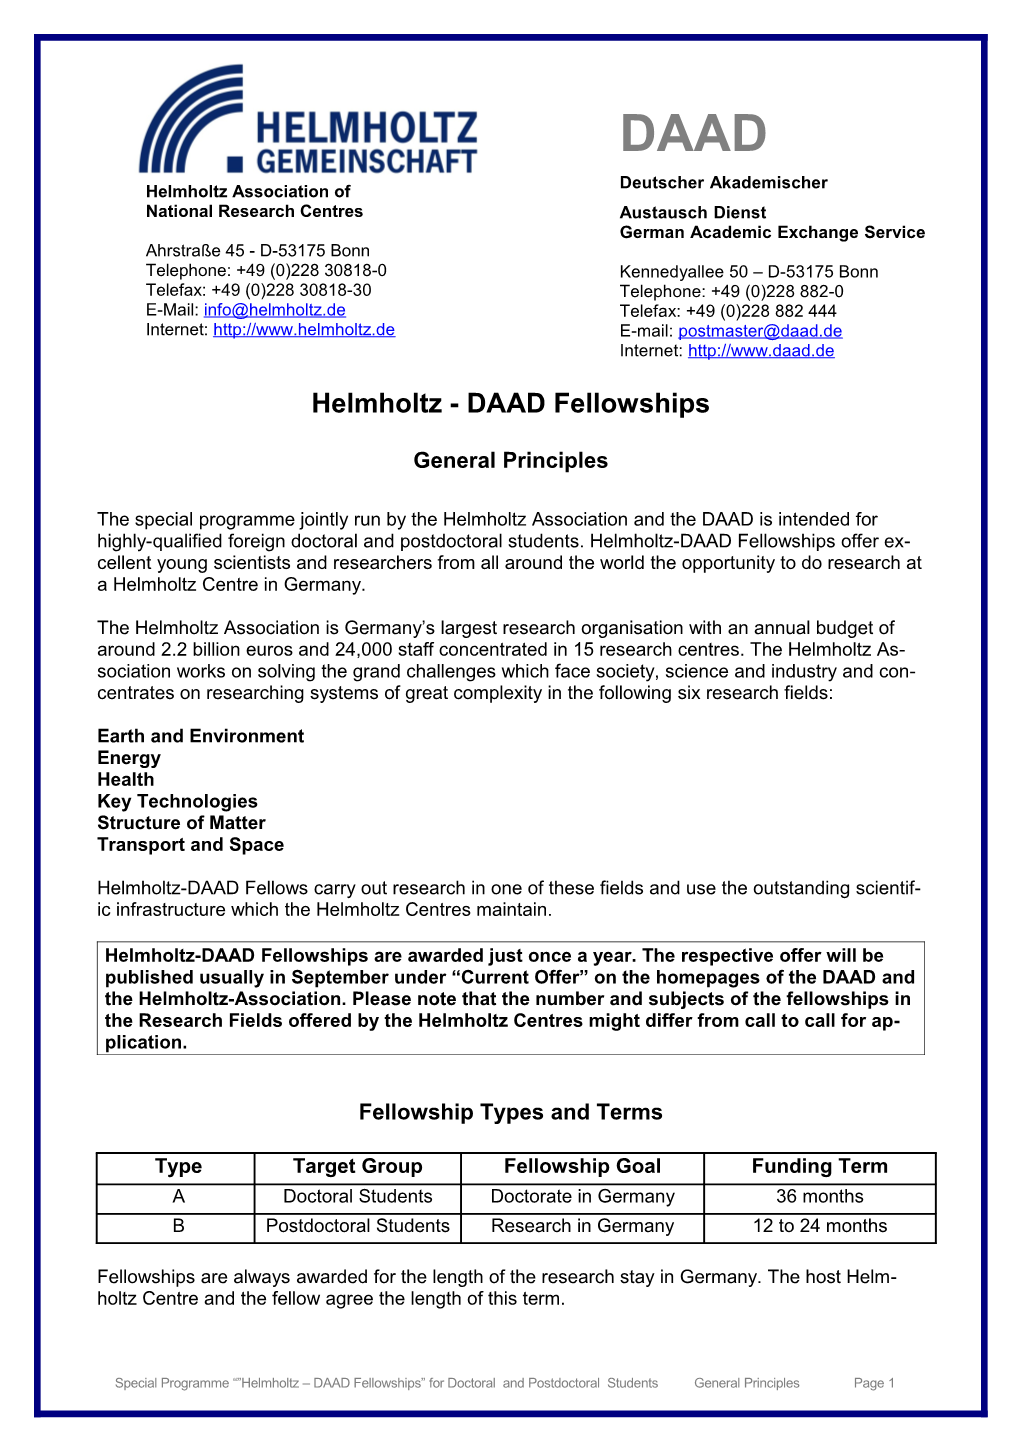 Helmholtz - DAAD Fellowships